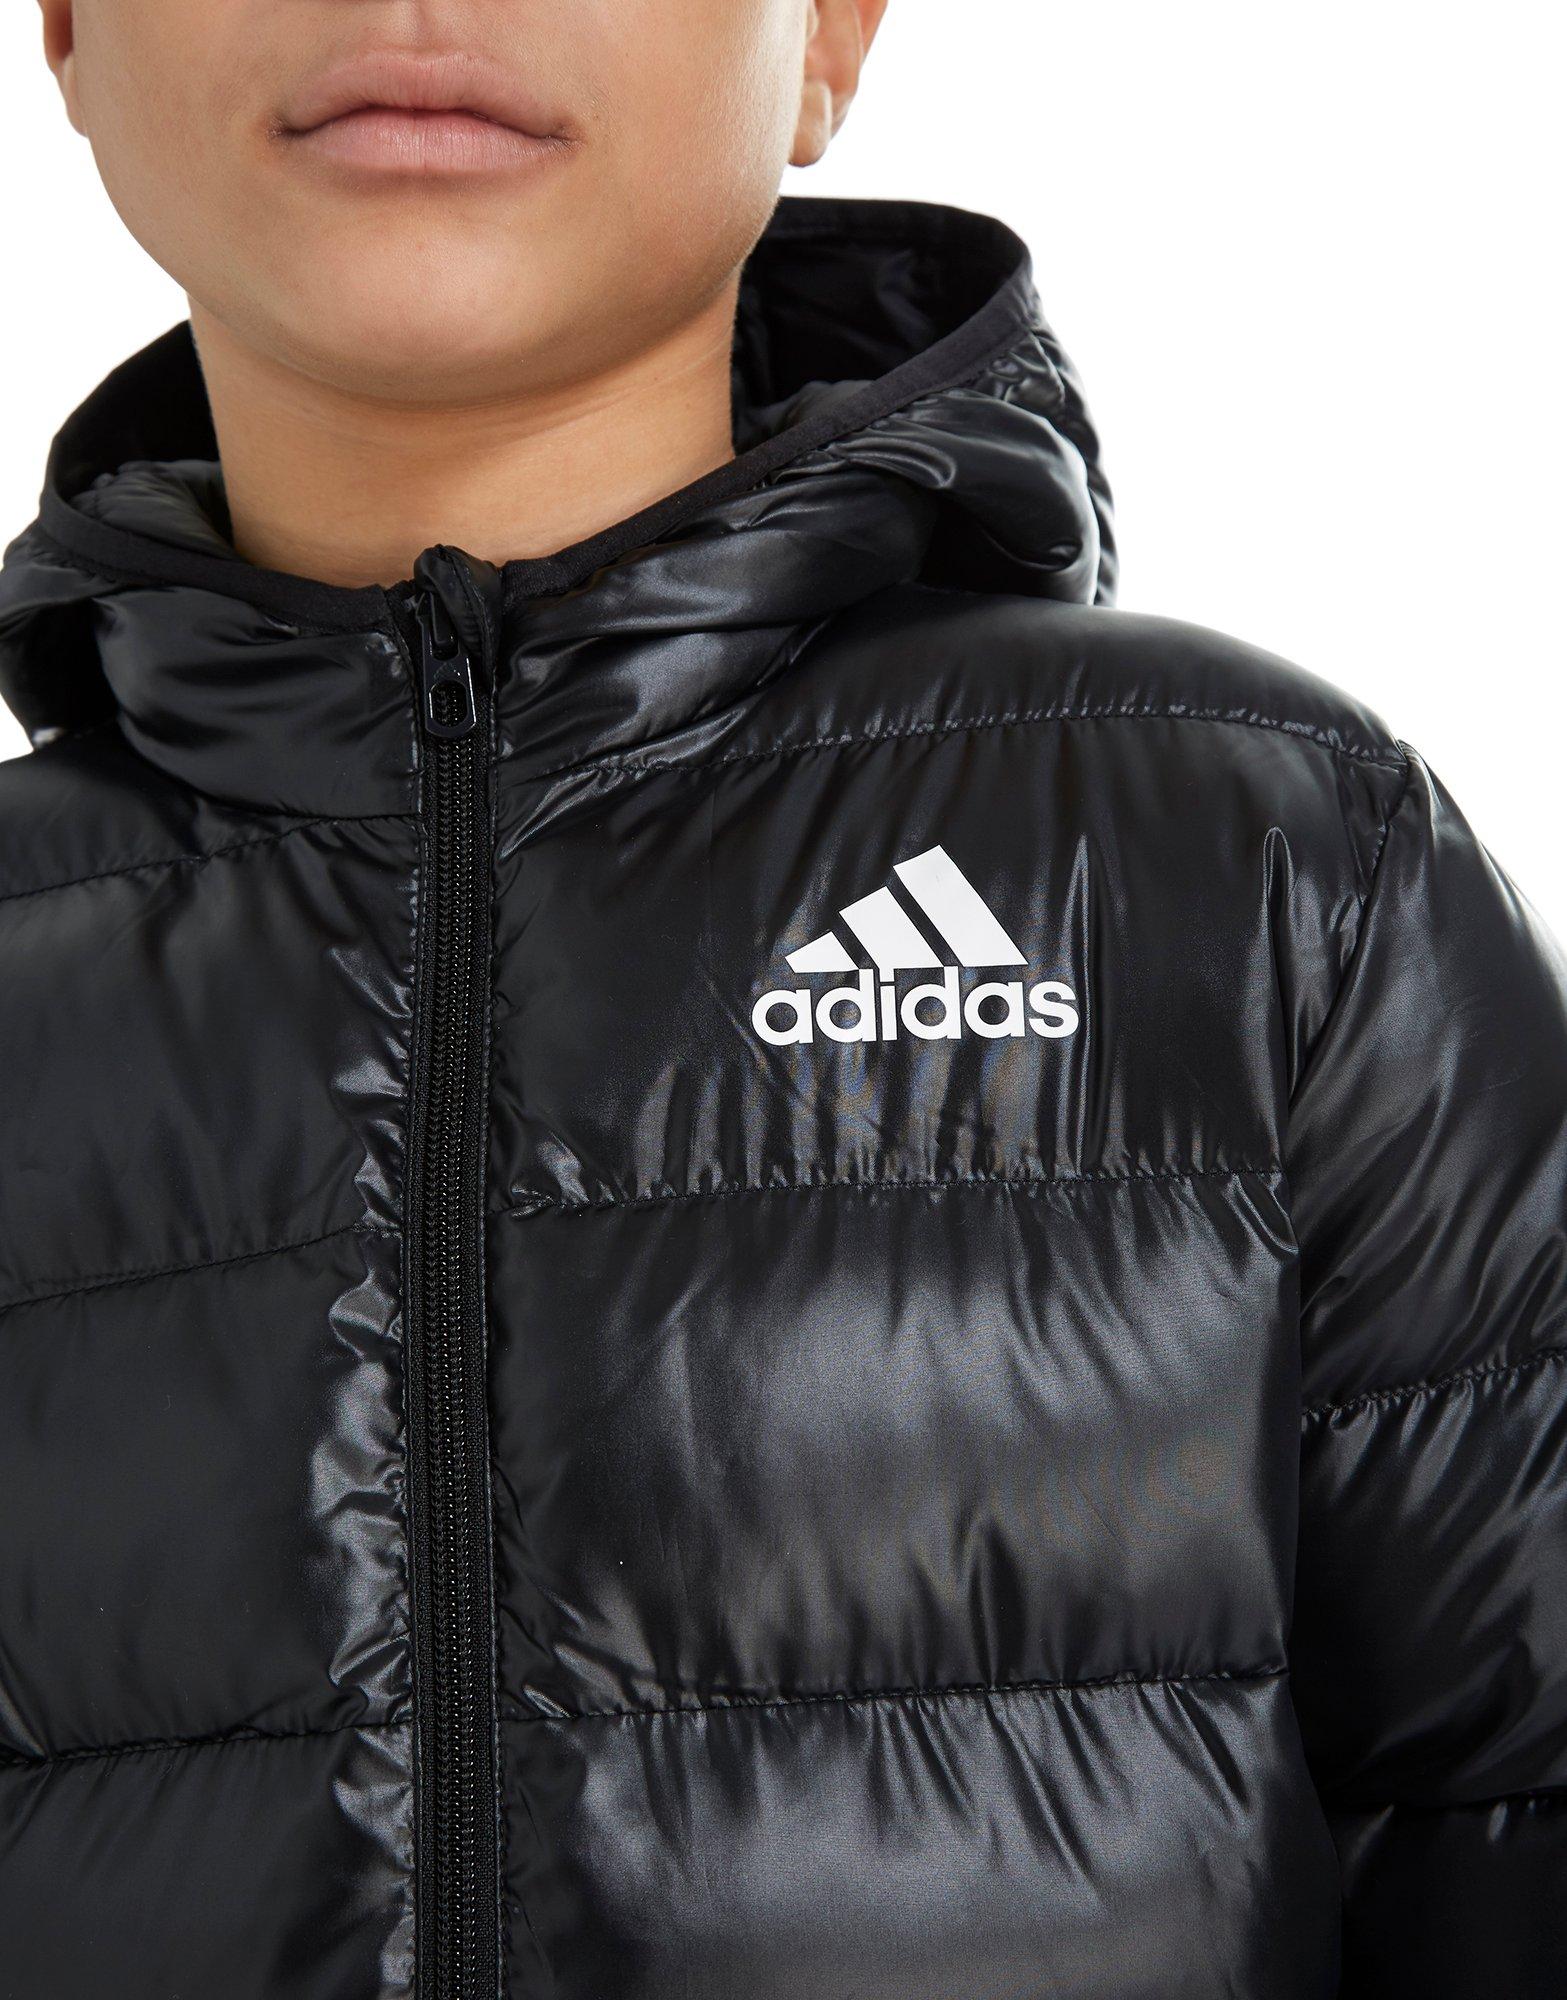 junior adidas bomber jacket